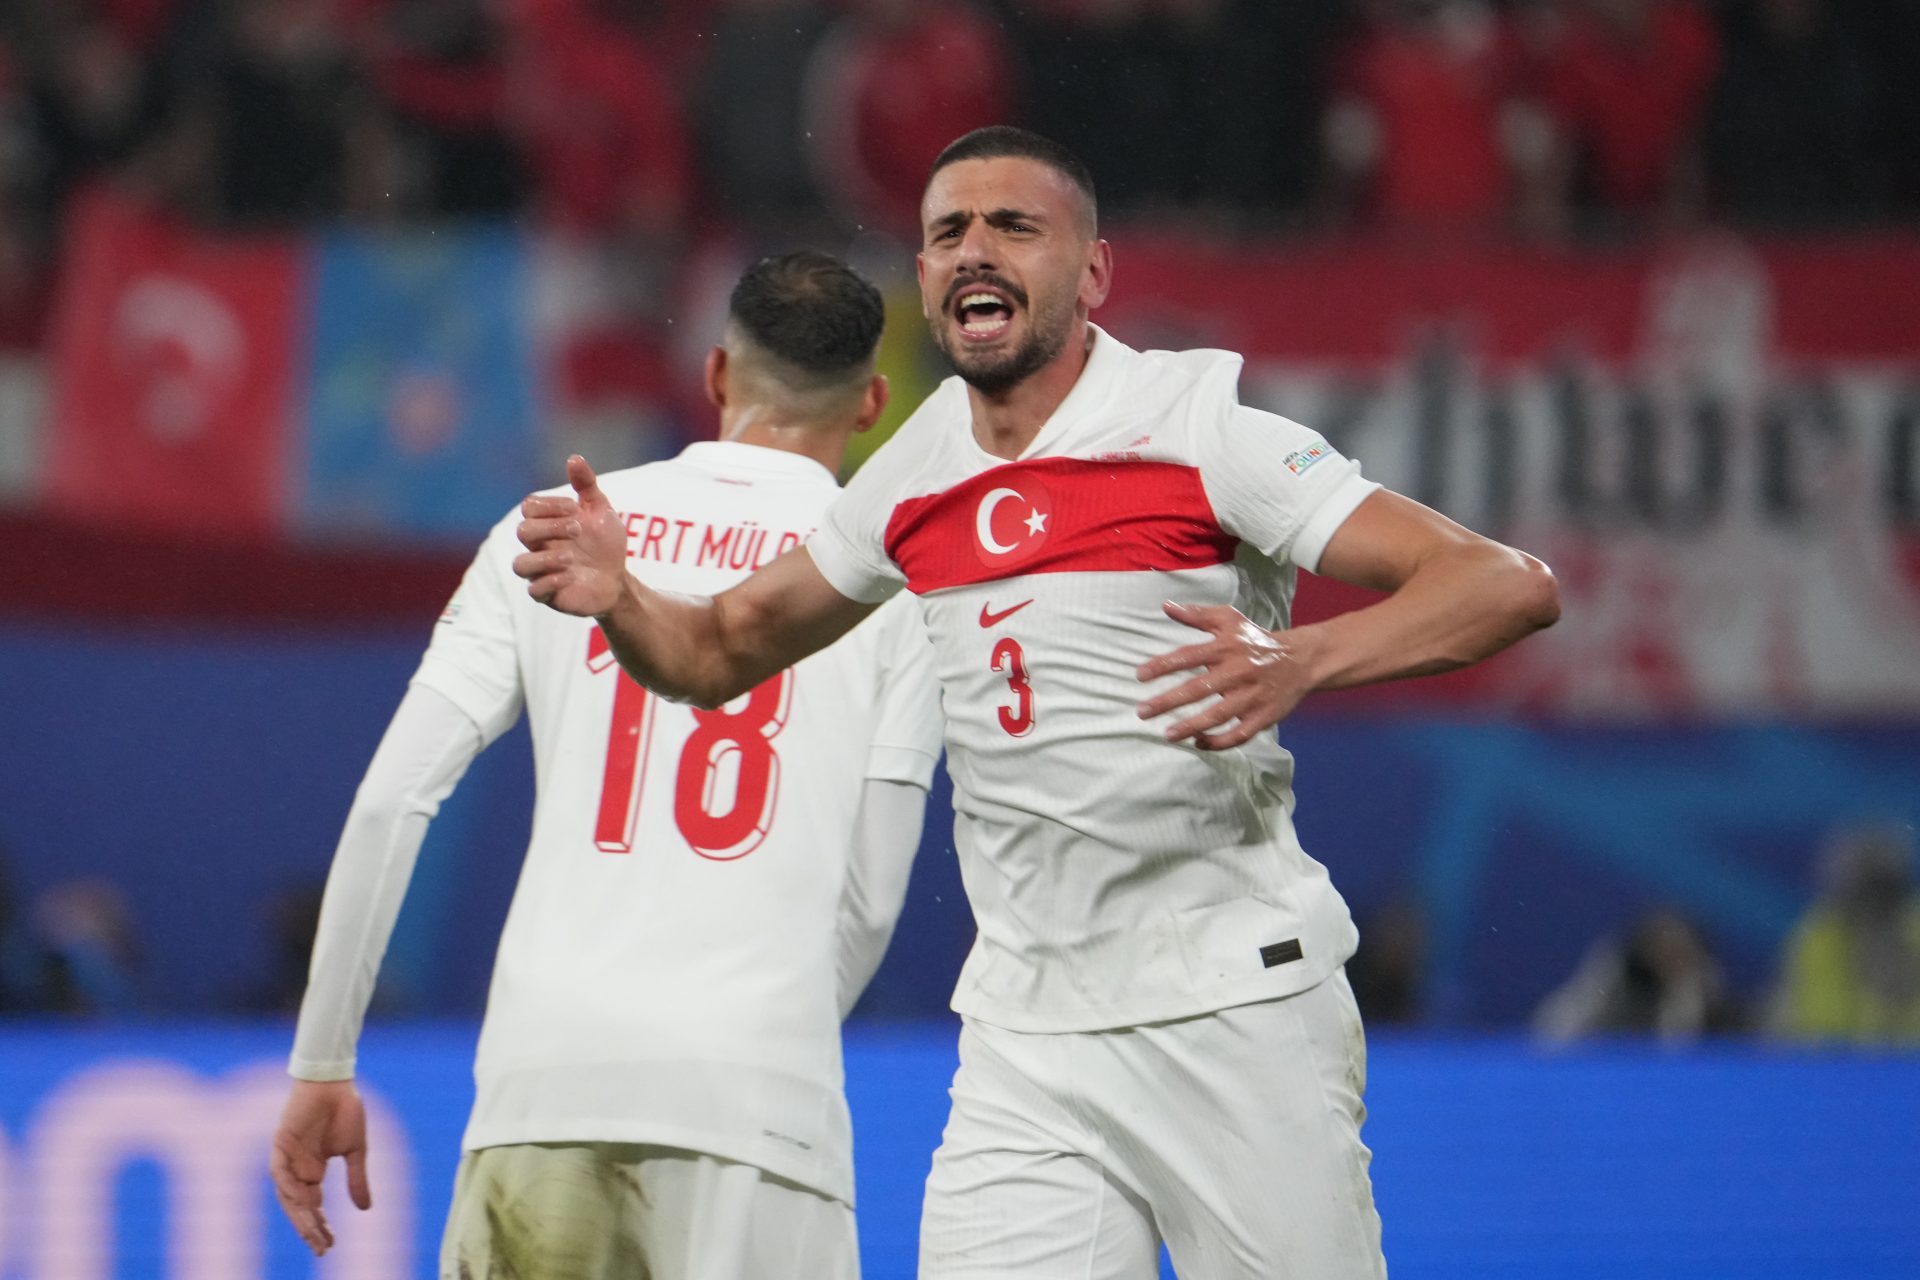 Turkish defender Merih Demiral sparks political outrage with controversial goal celebration